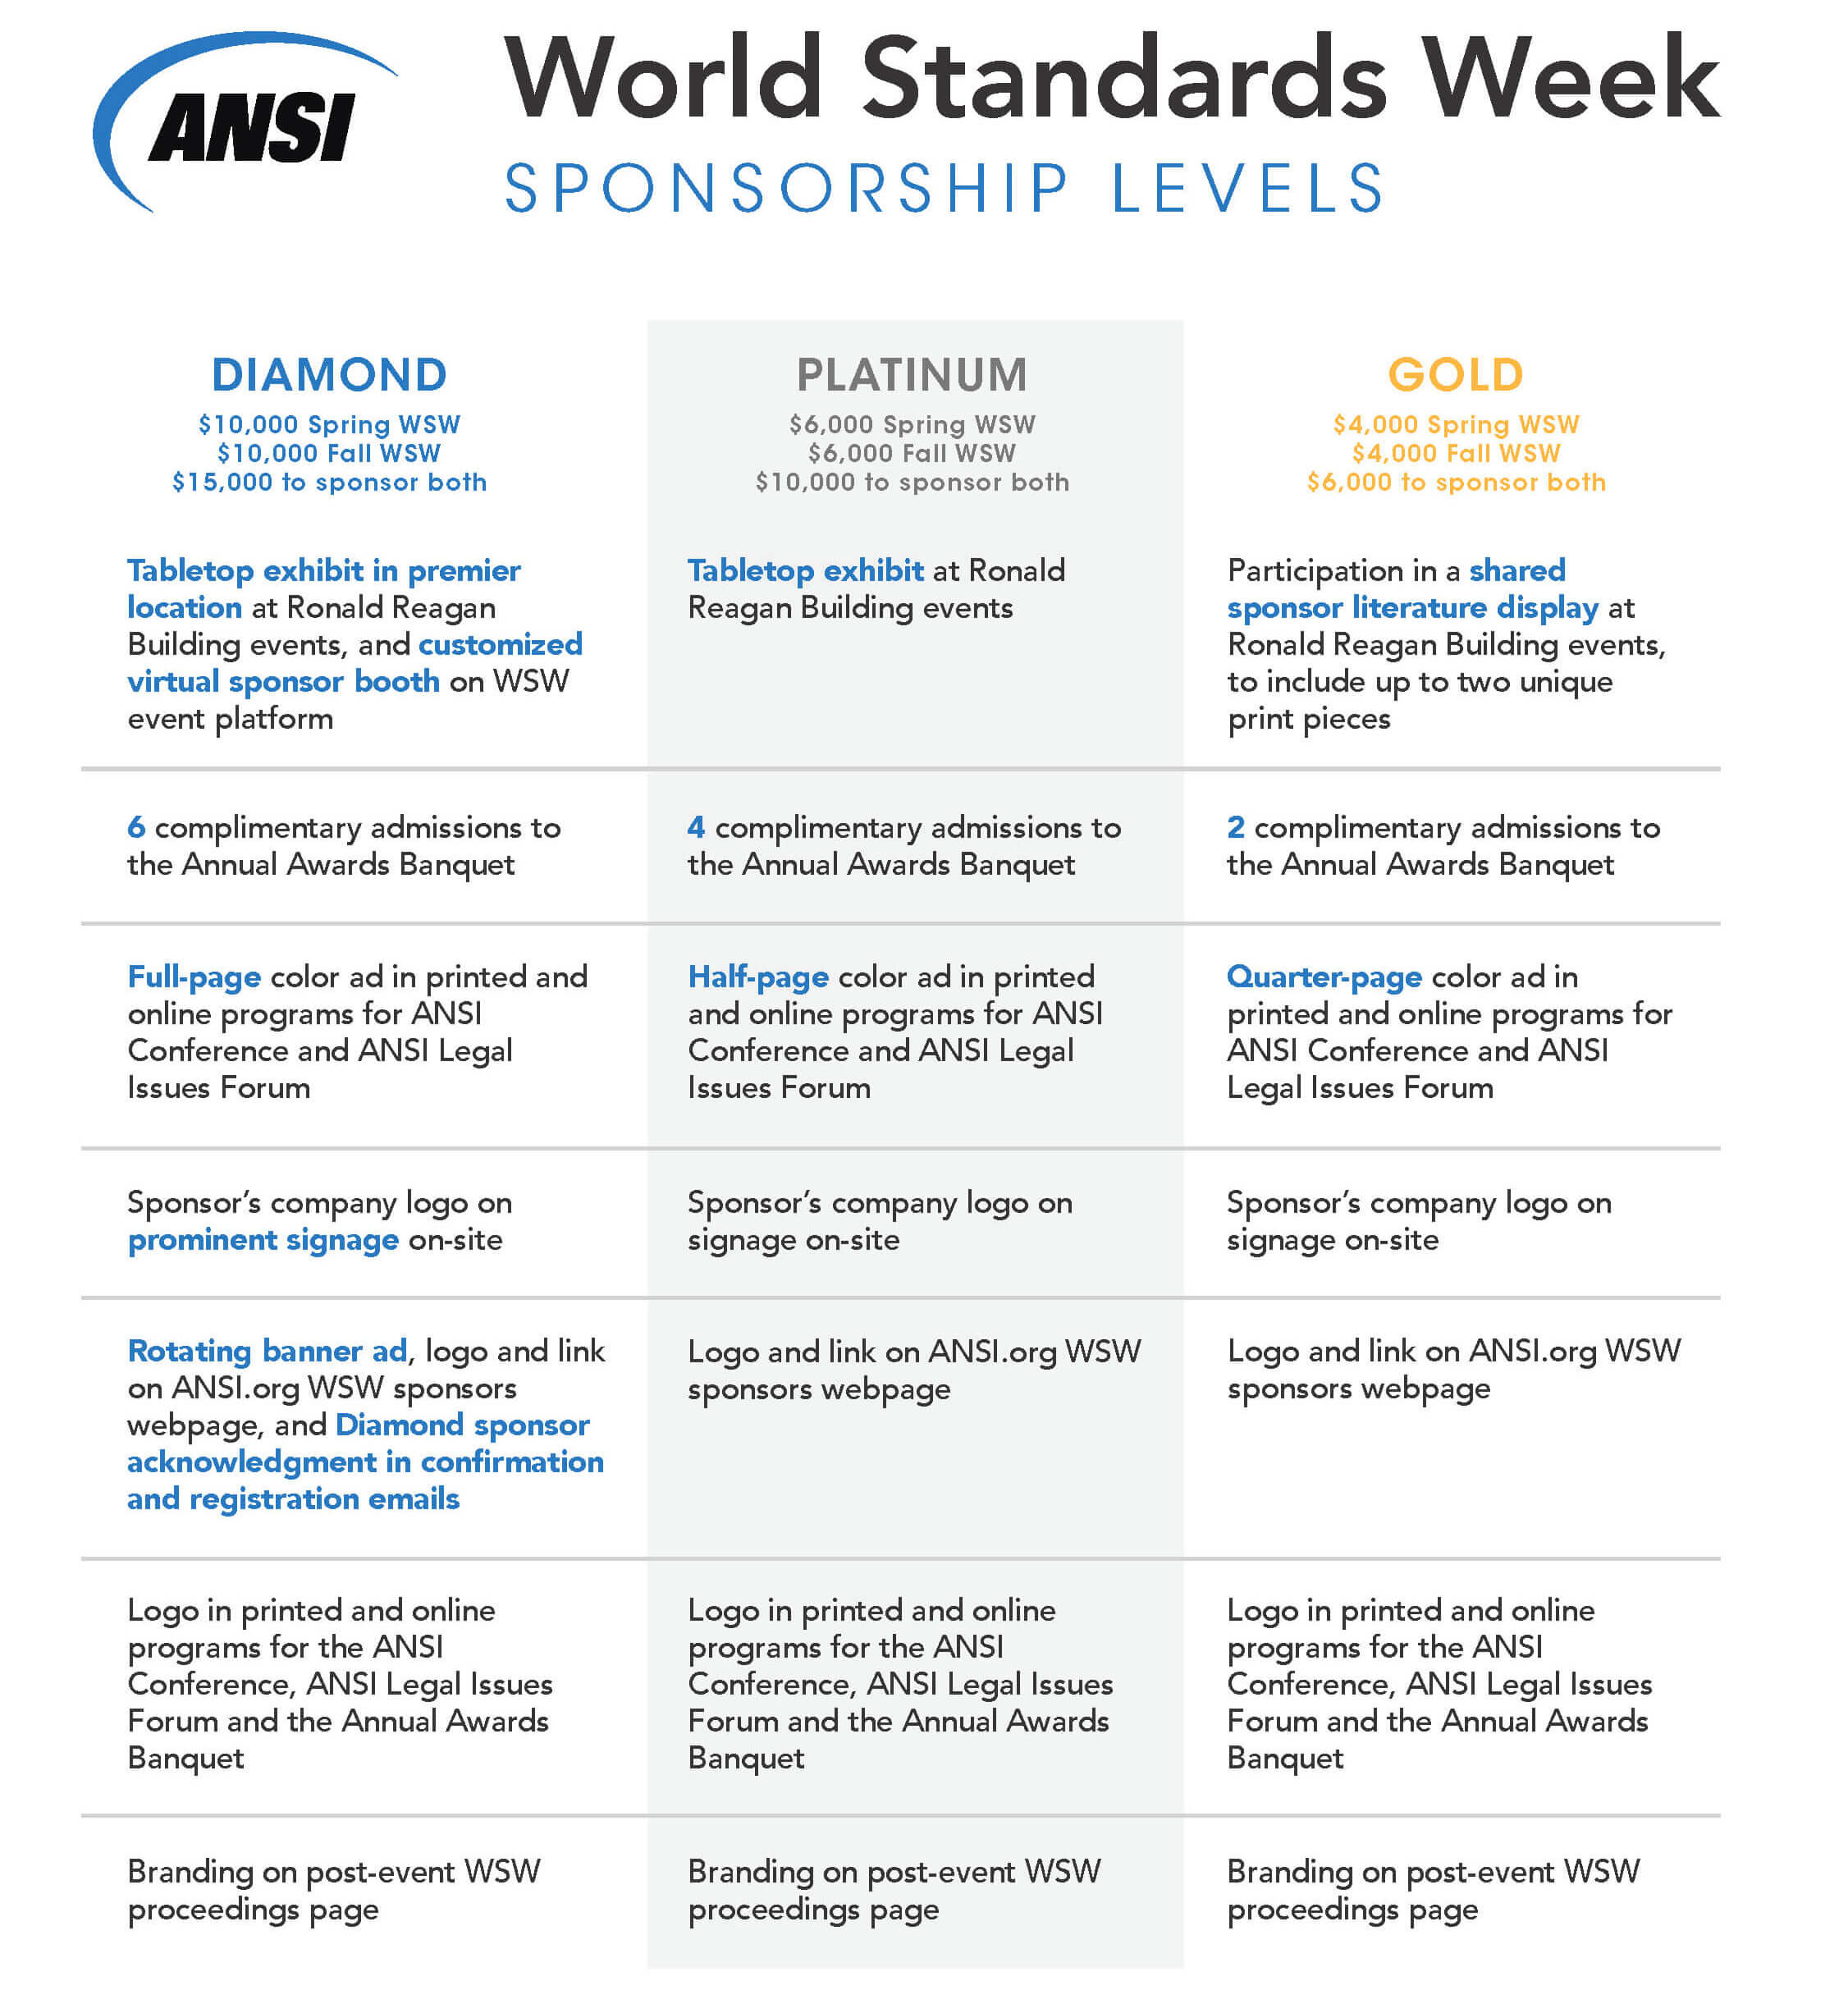 ANSI World Standards Week Sponsorship Levels and Benefits